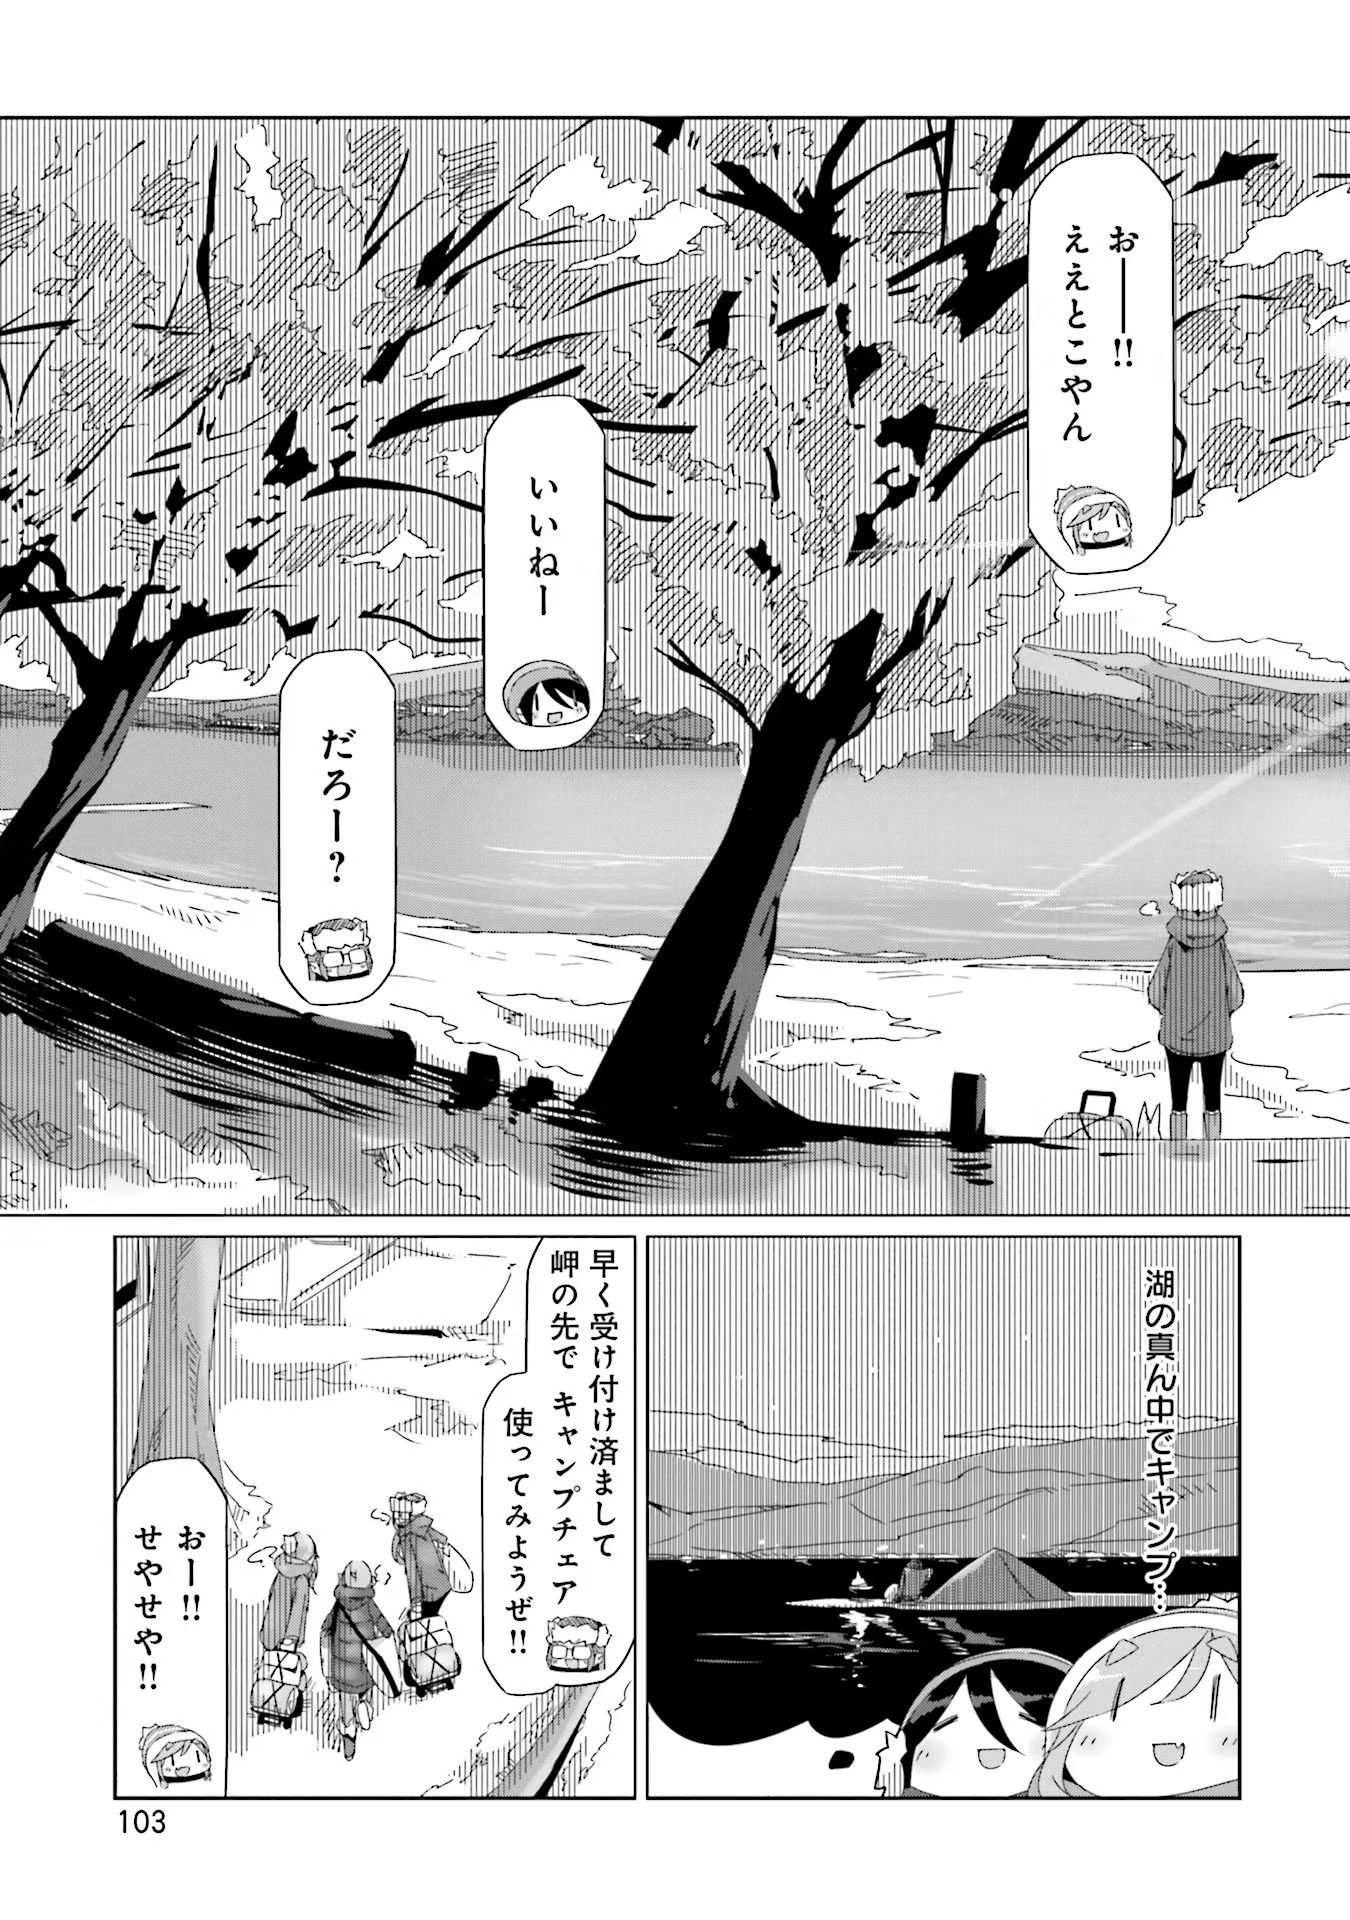 Yuru Camp - Chapter 32 - Page 23